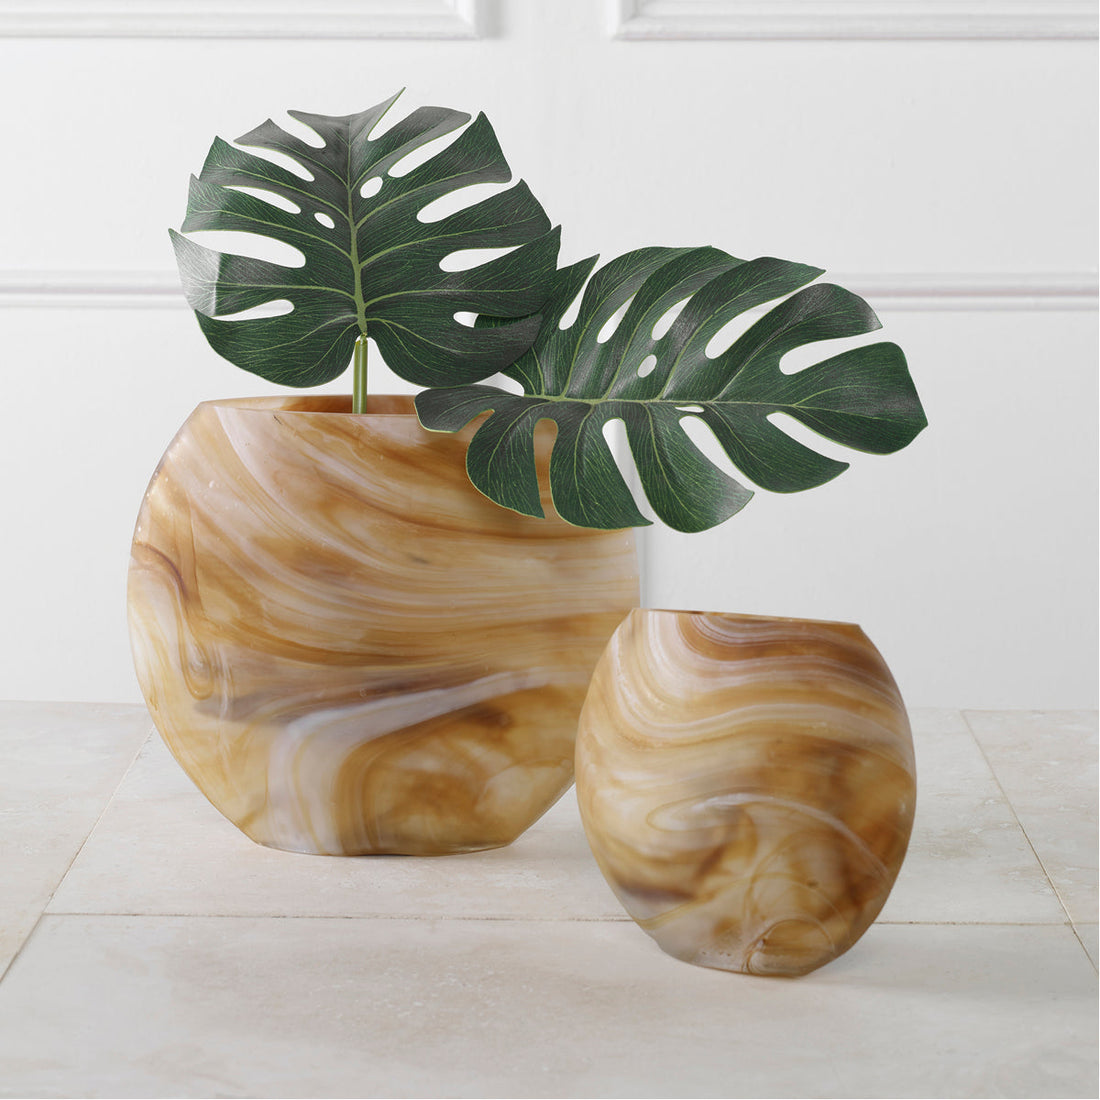 Uttermost Fusion Swirled Caramel and Ivory Vases, 2-Piece Set